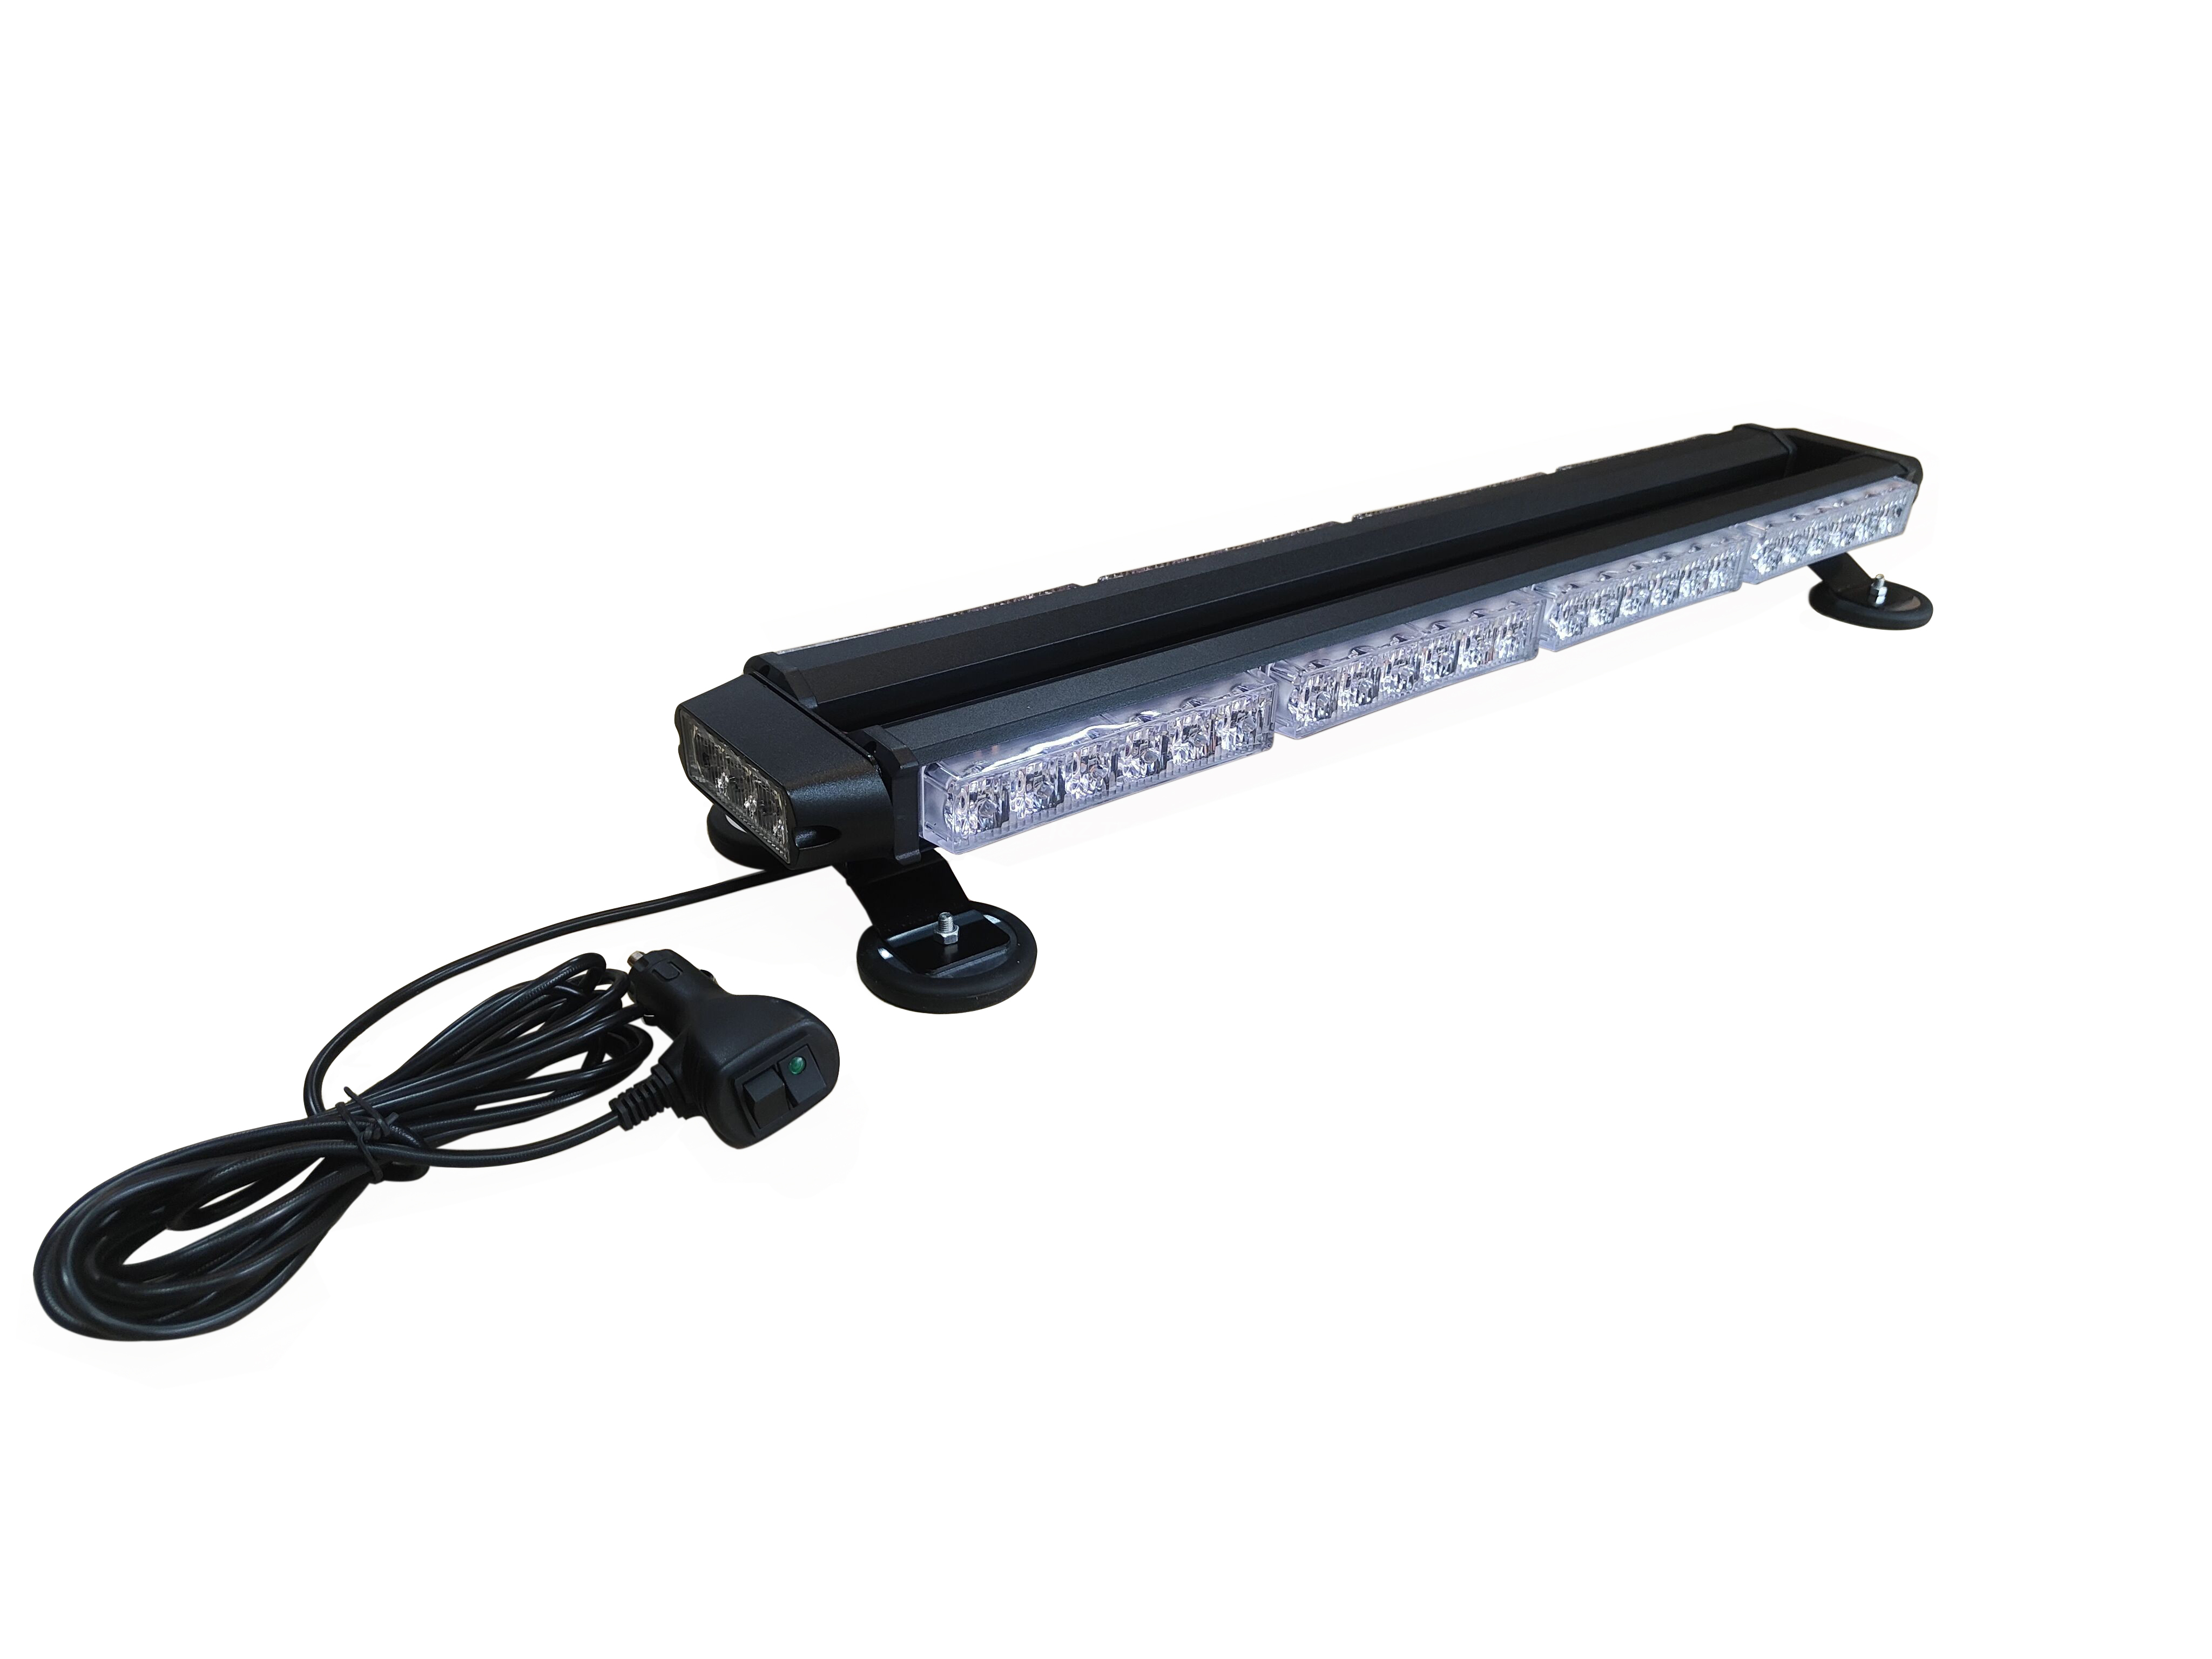 Luces intermitentes de emergencia para vehículos LED-318-4, barra de luz LED magnética de 12V, luces intermitentes de emergencia de 54W